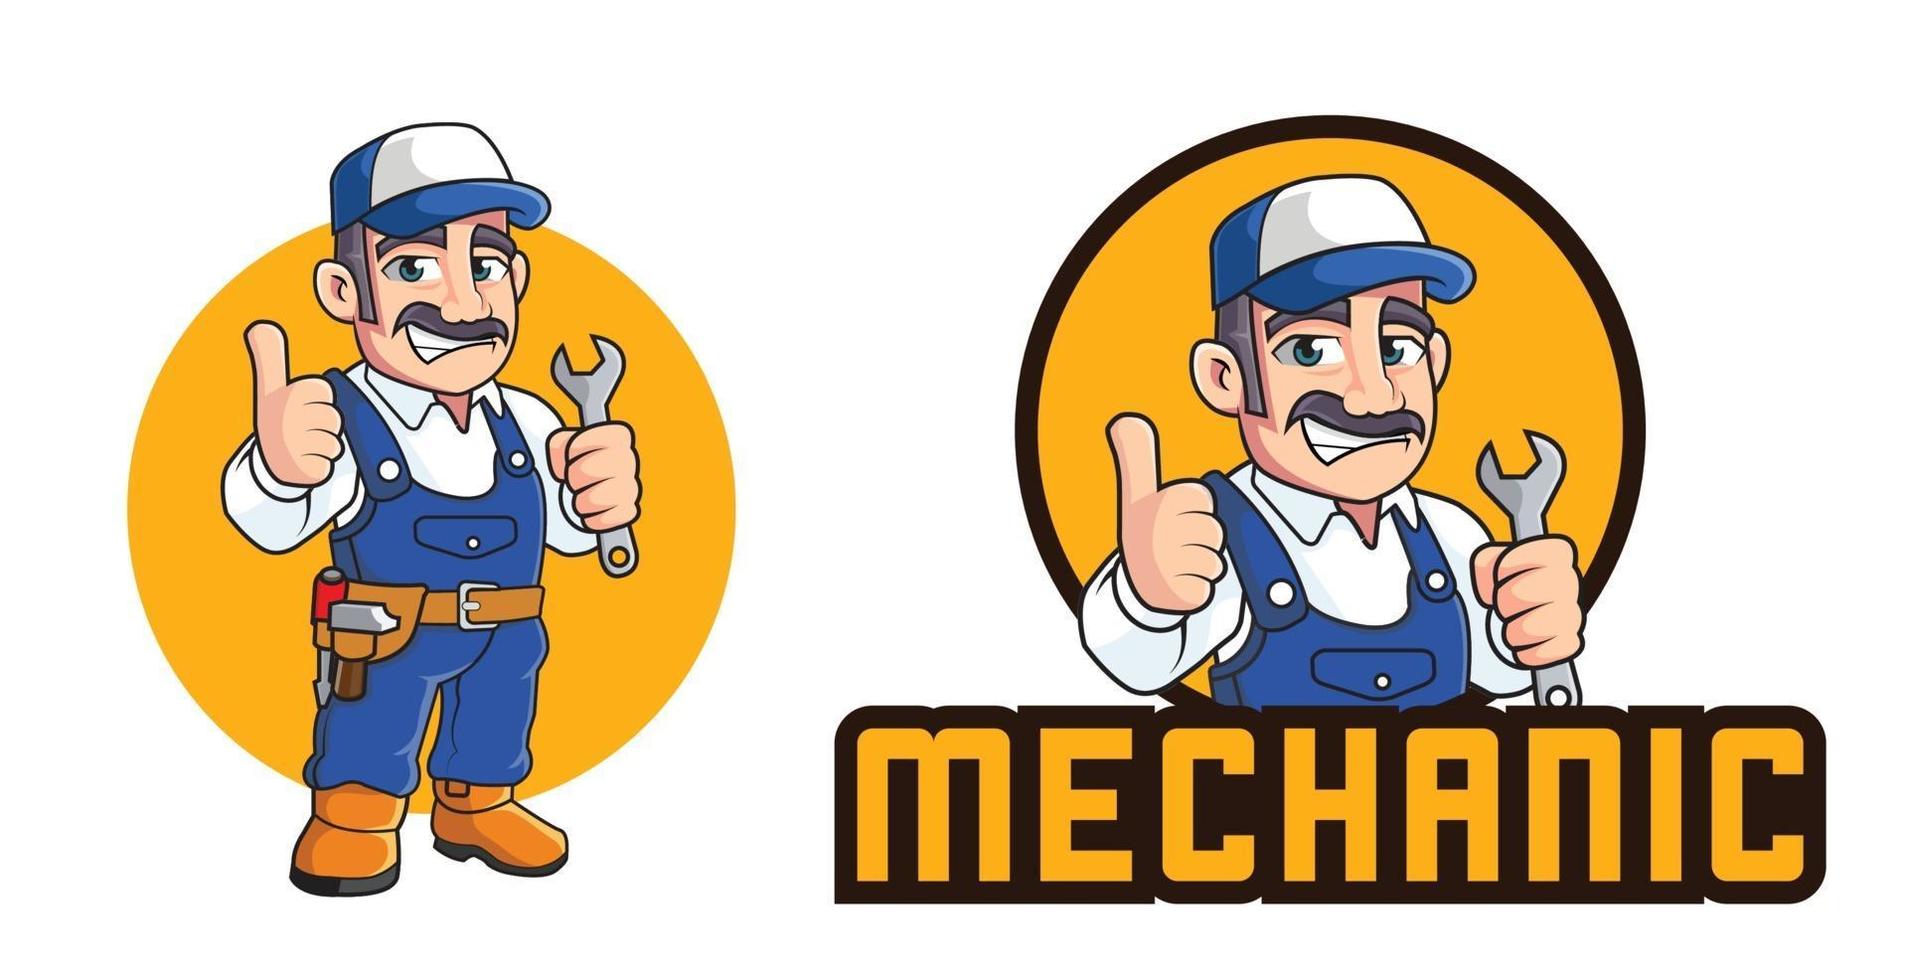 mechanic mascot logo template vector